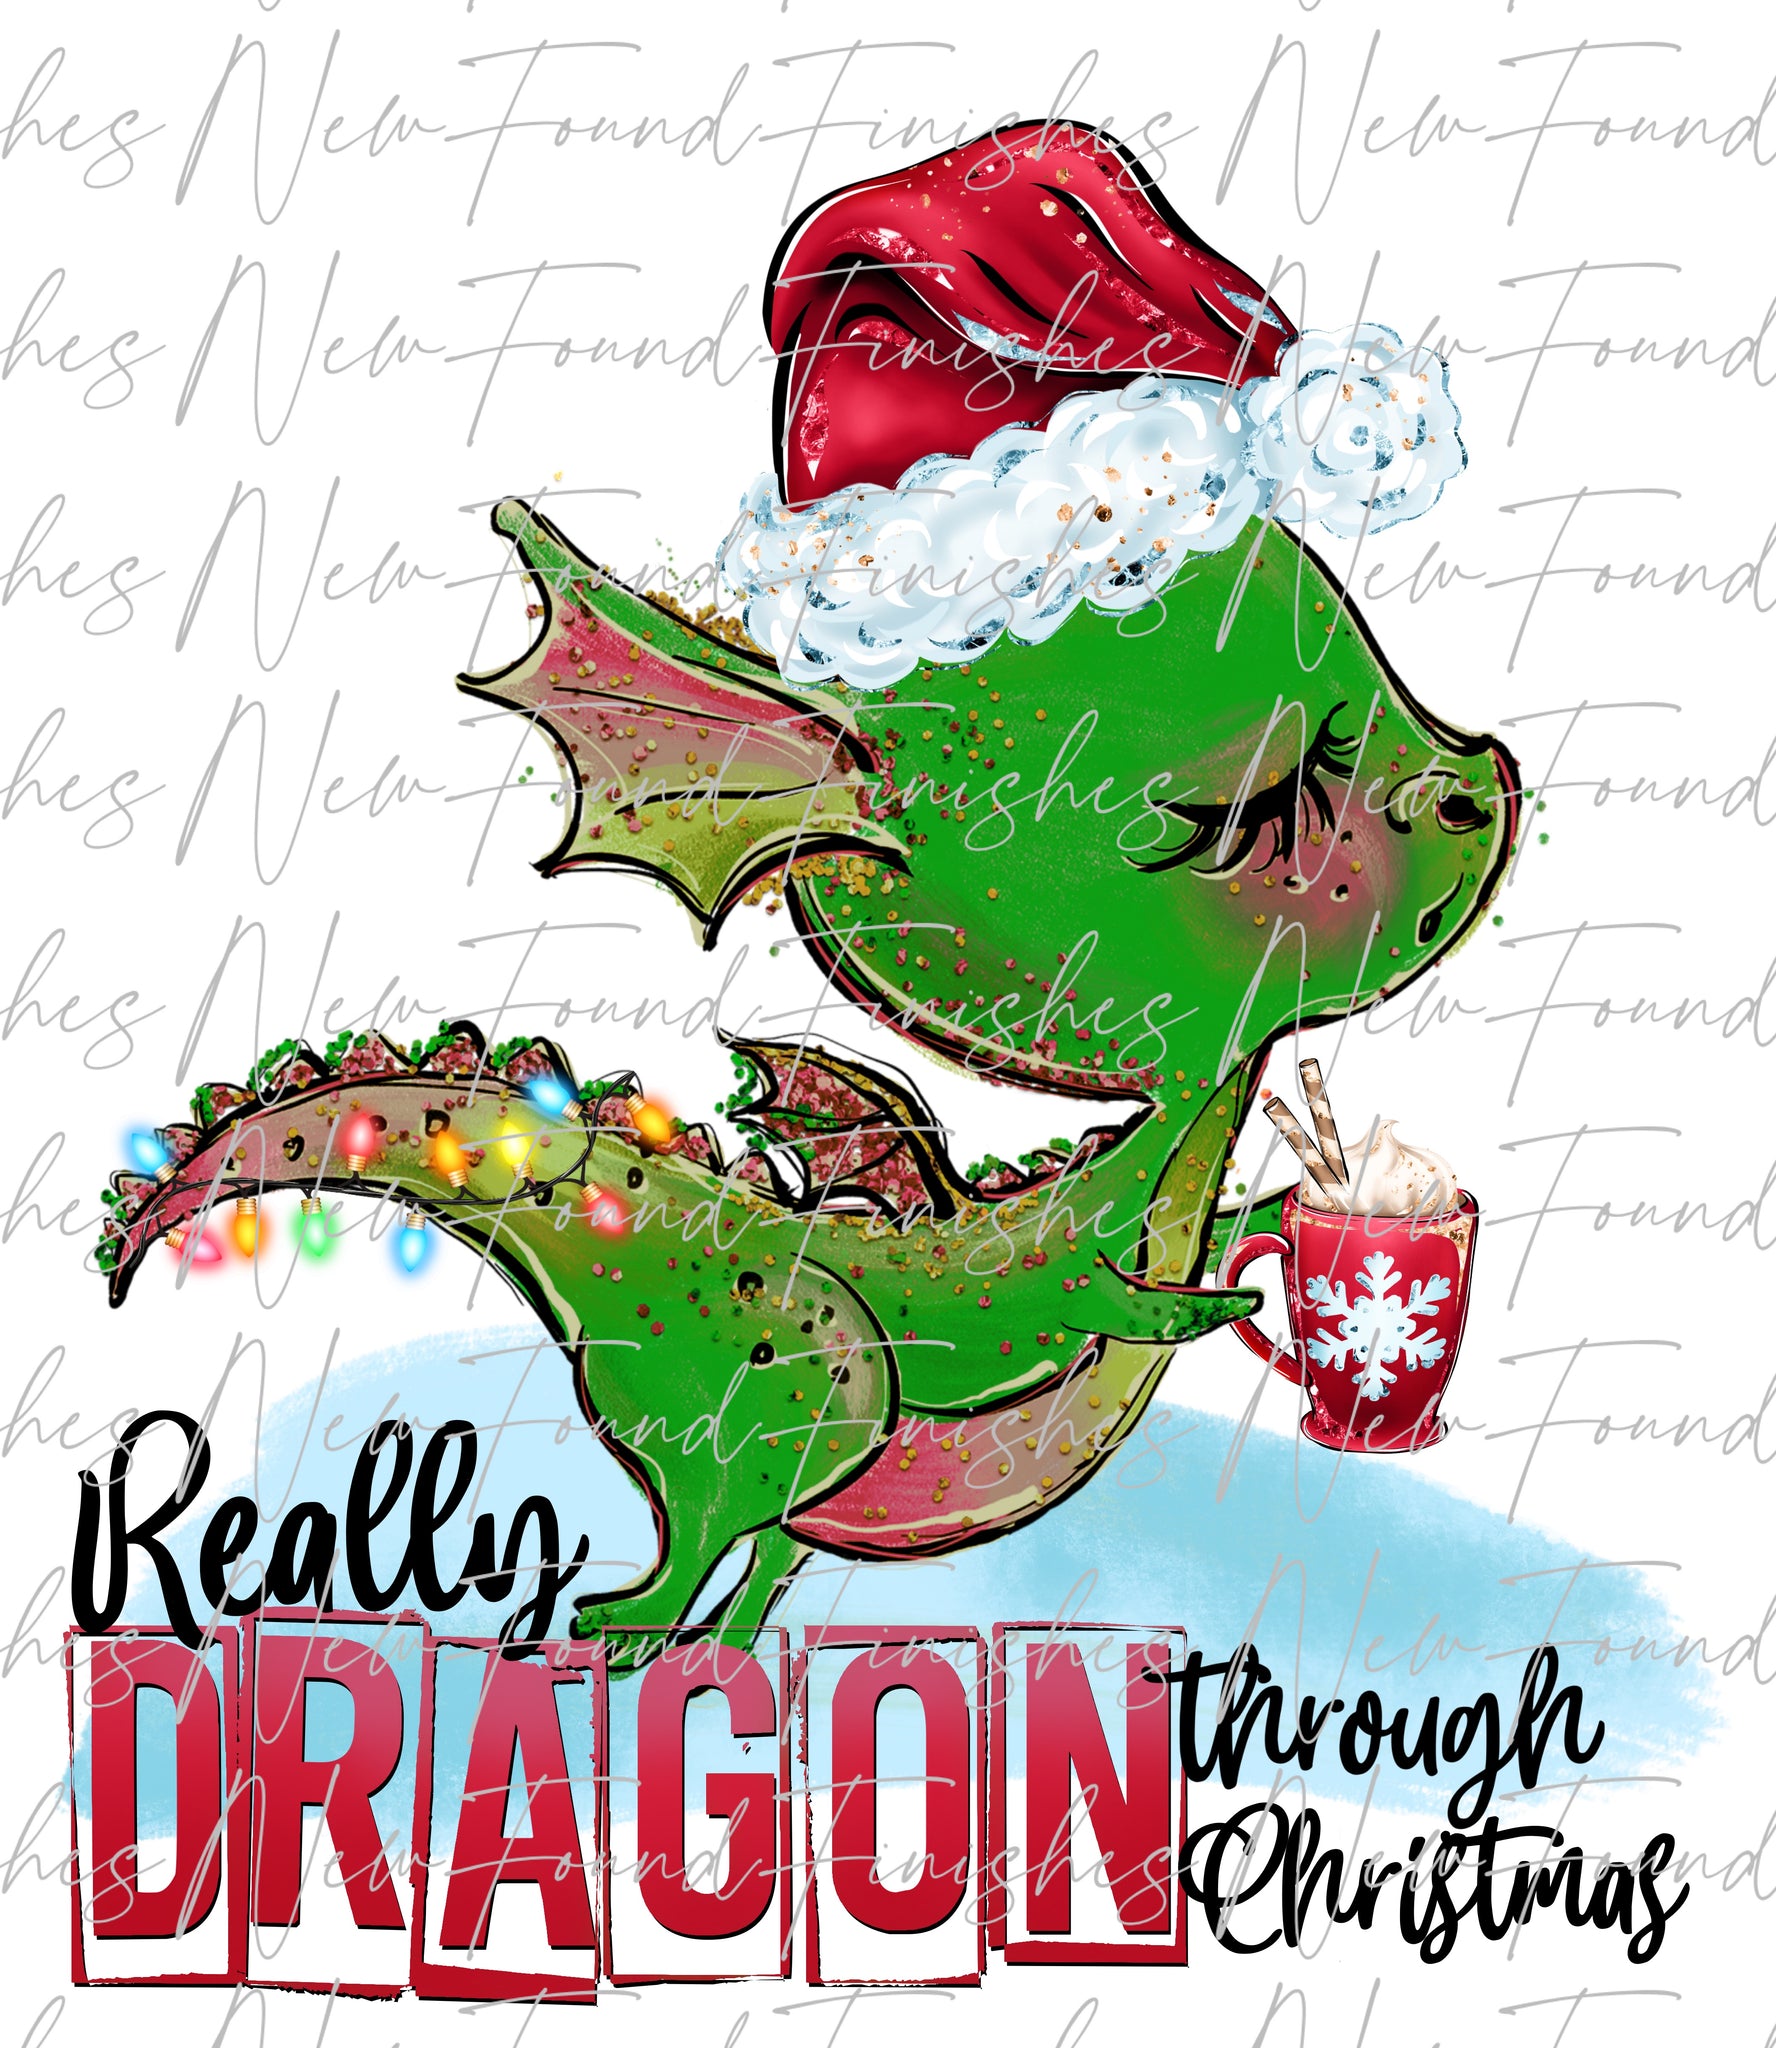 Dragon through Christmas